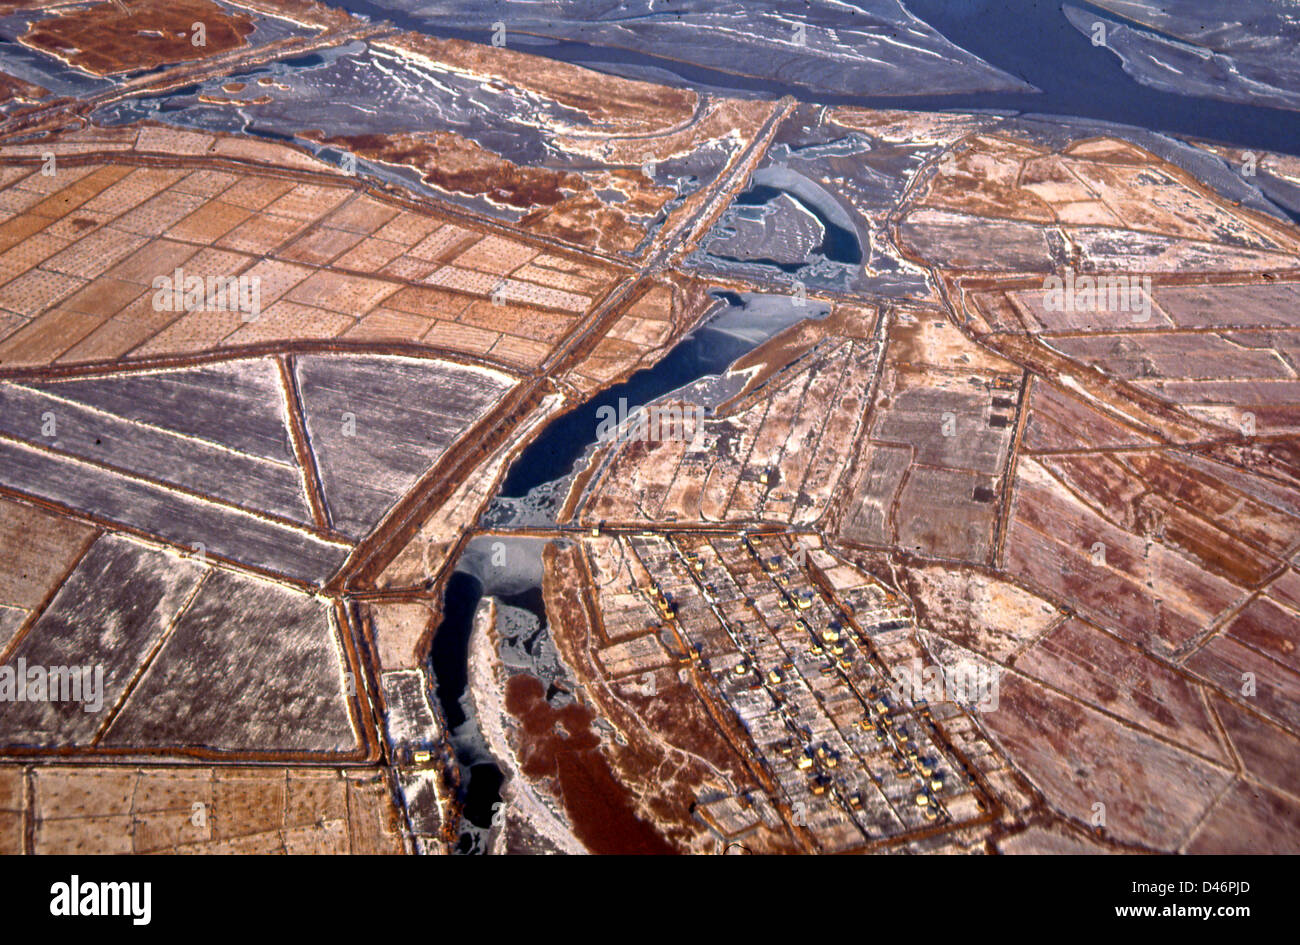 Ama Darya River aerea che mostra canali di irrigazione, Uzbekistan 1993 Foto Stock